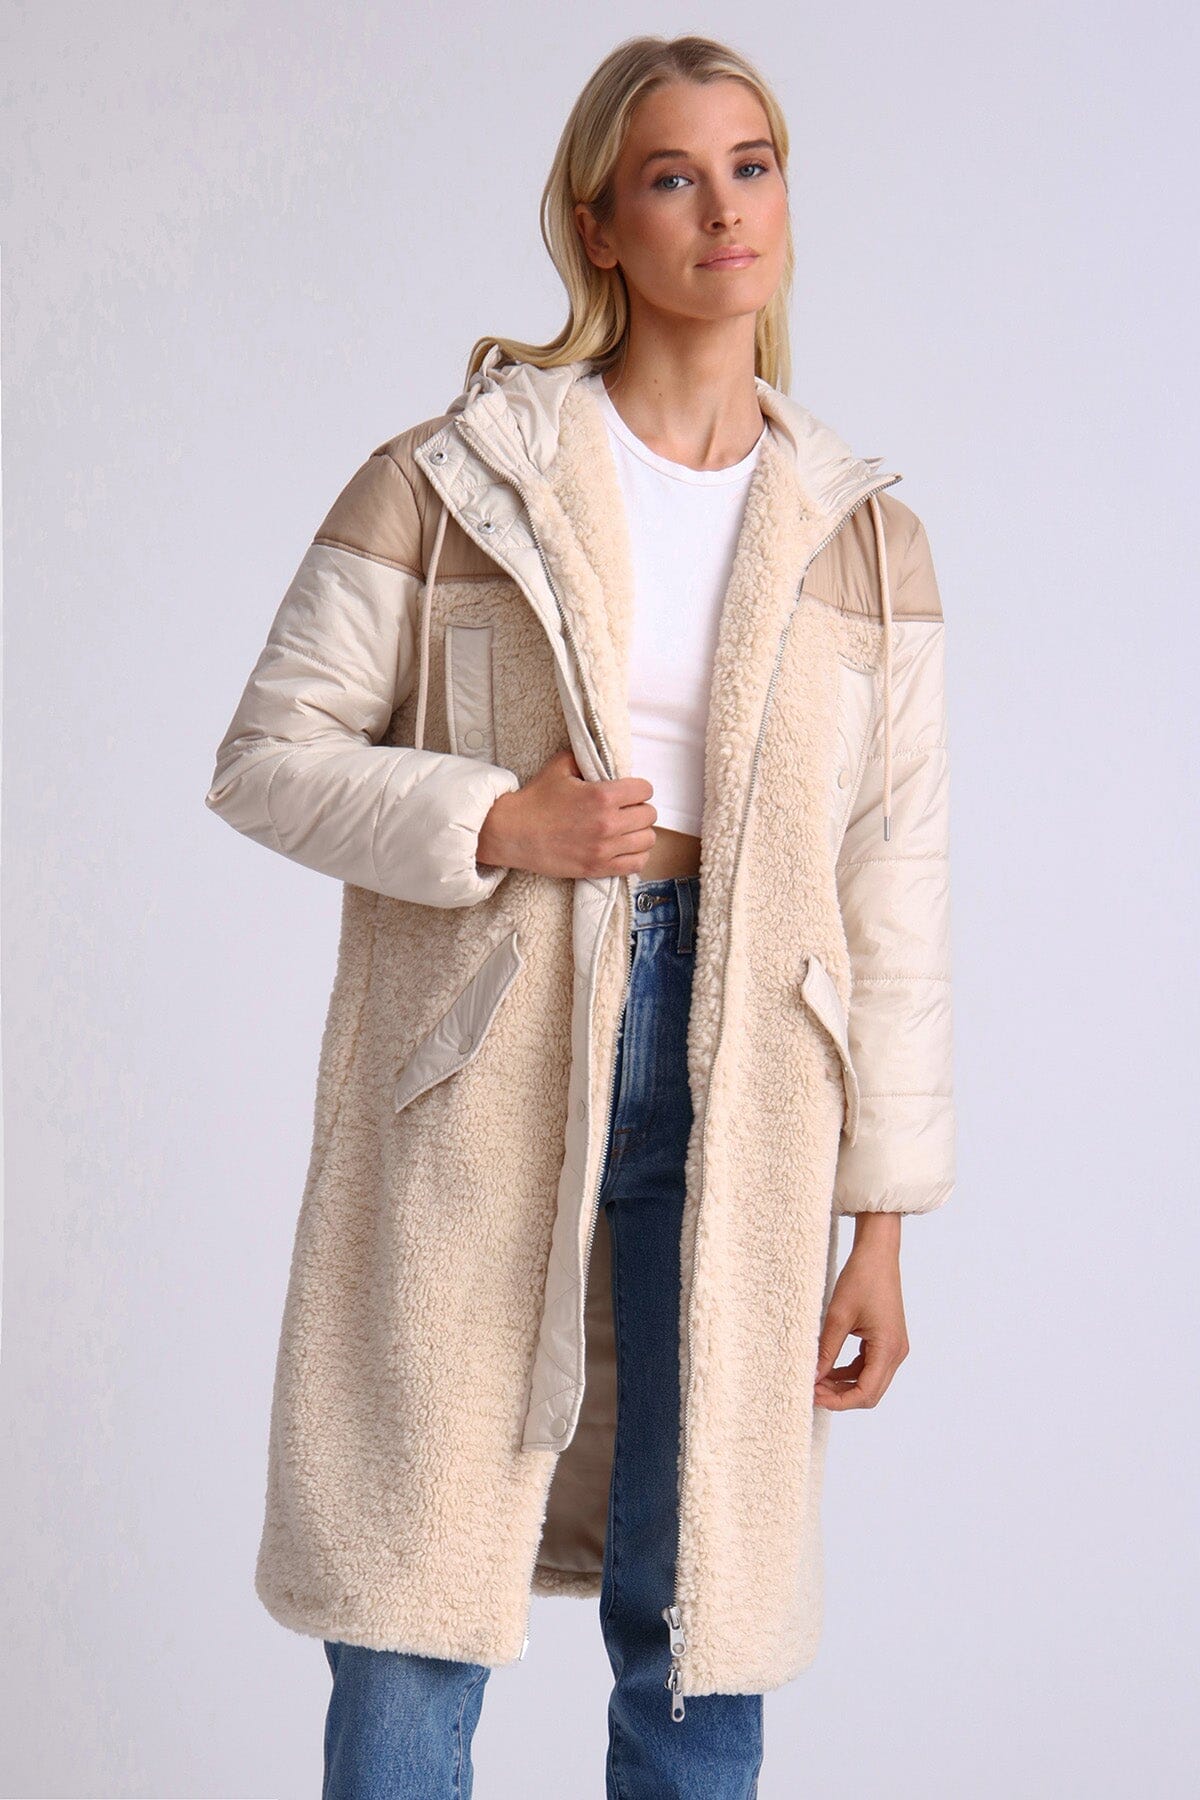 Oat beige faux fur quilted anorak long coat jacket - figure flattering cozy streetwear style jackets coats for ladies